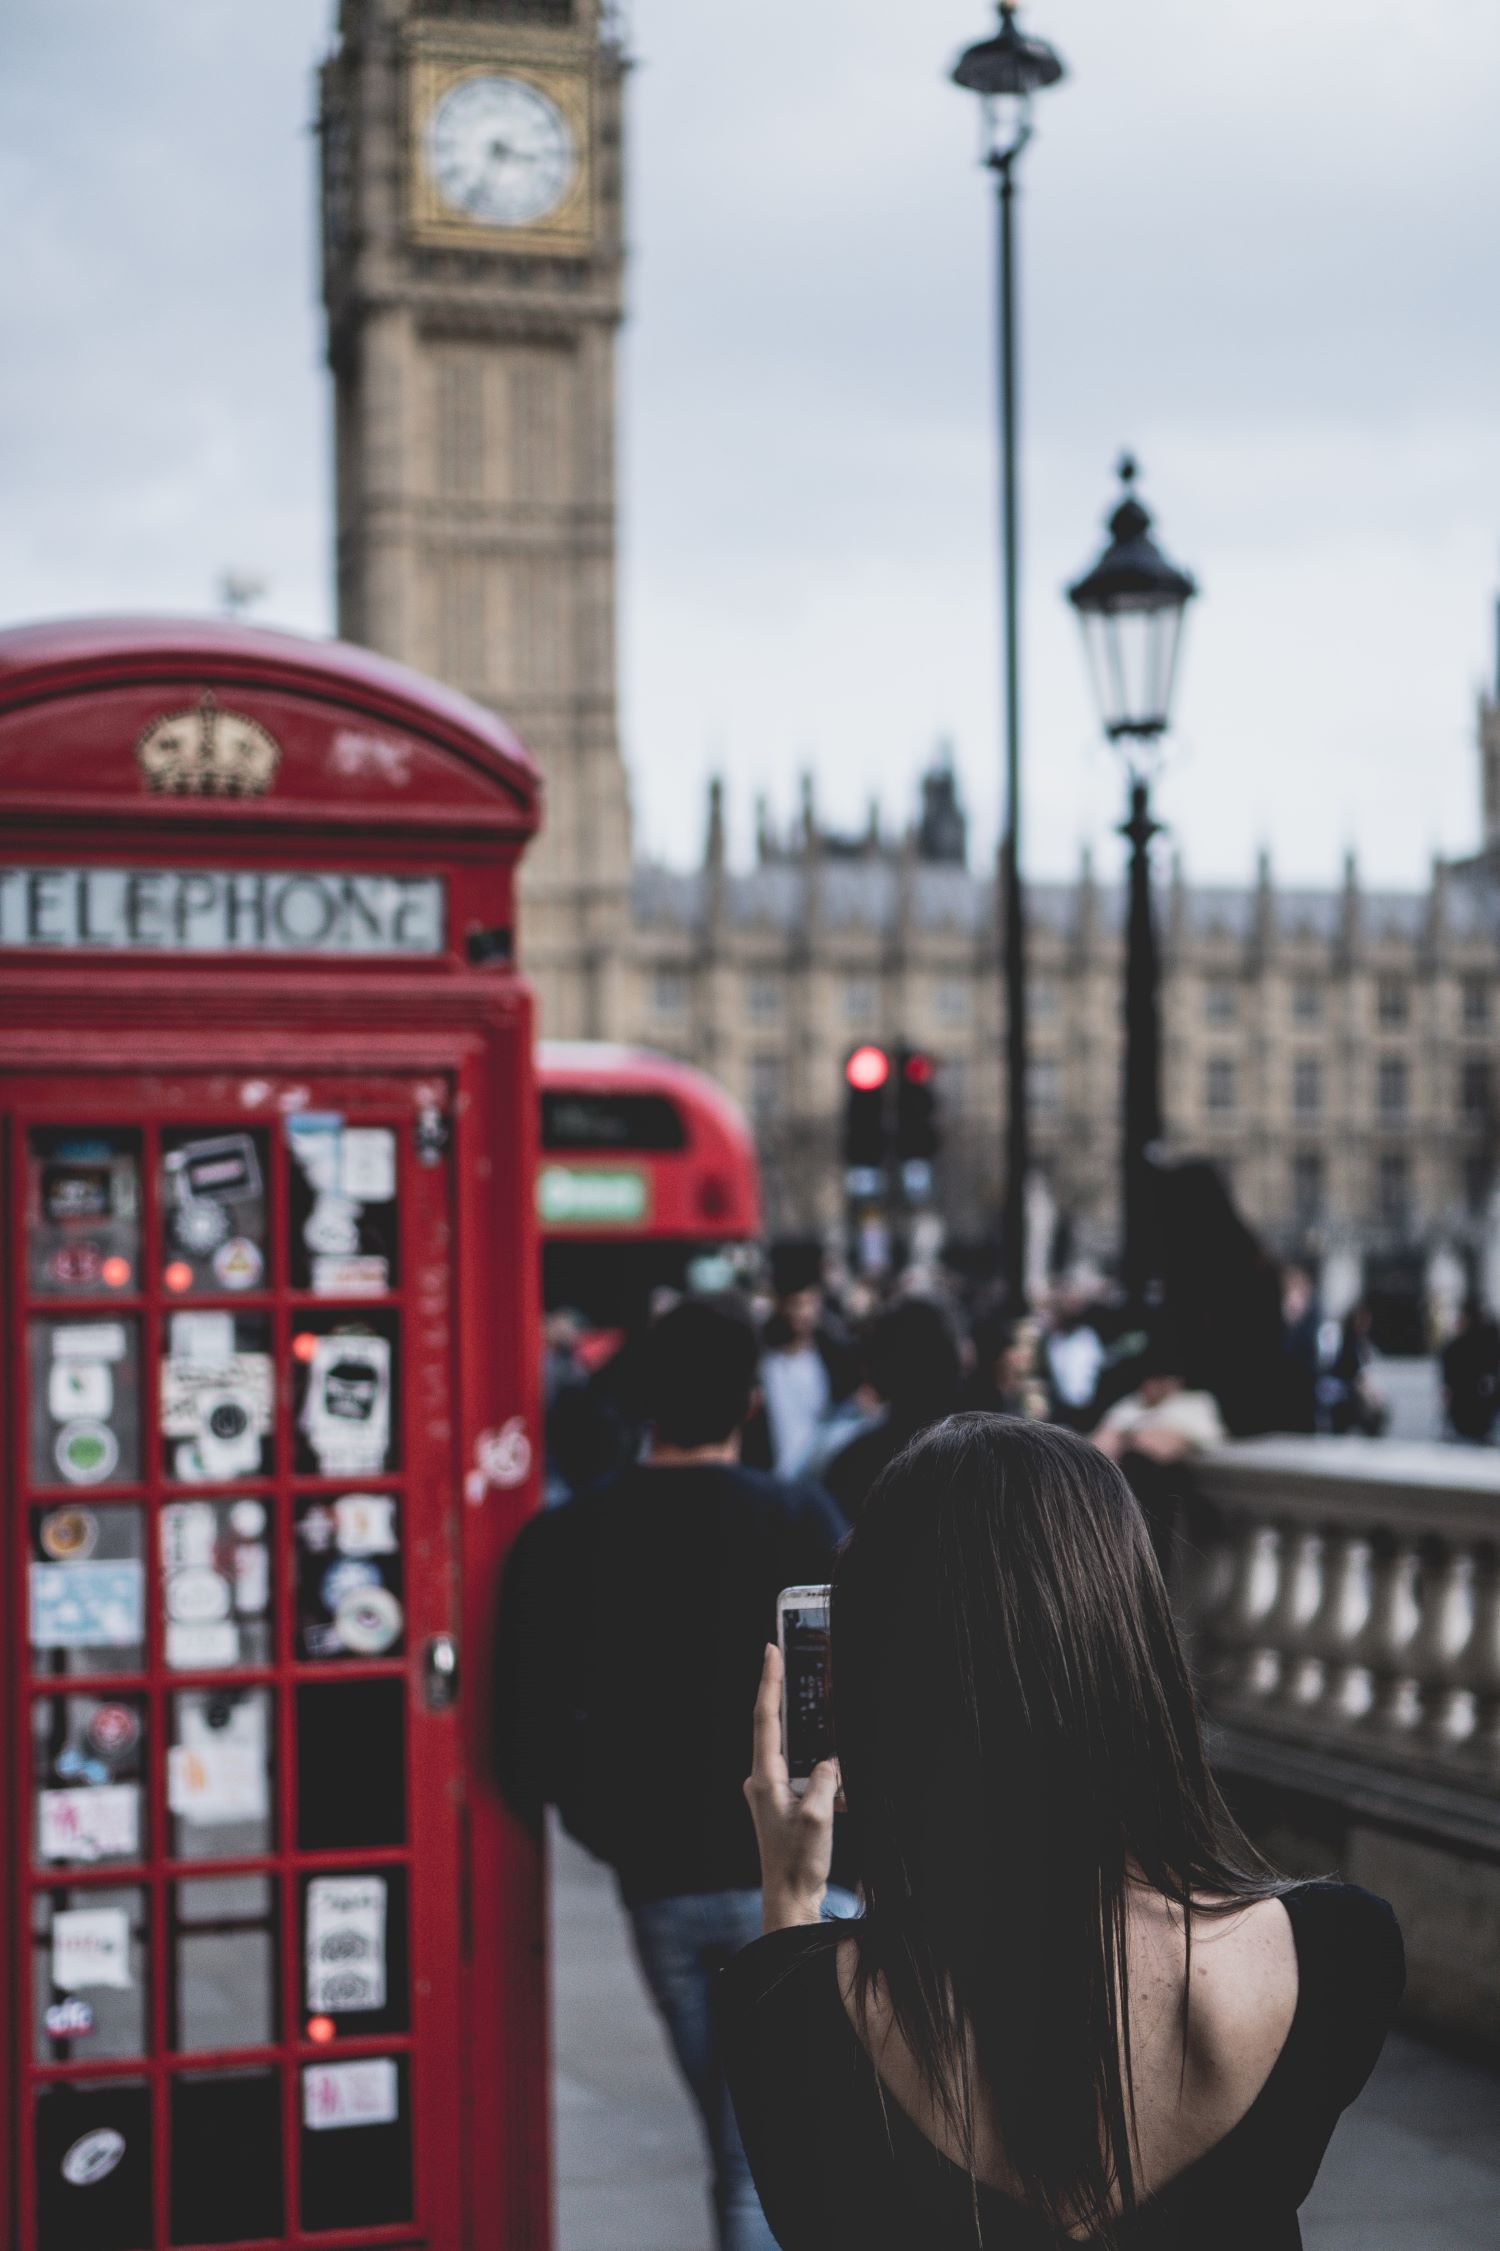 London telephone Booth